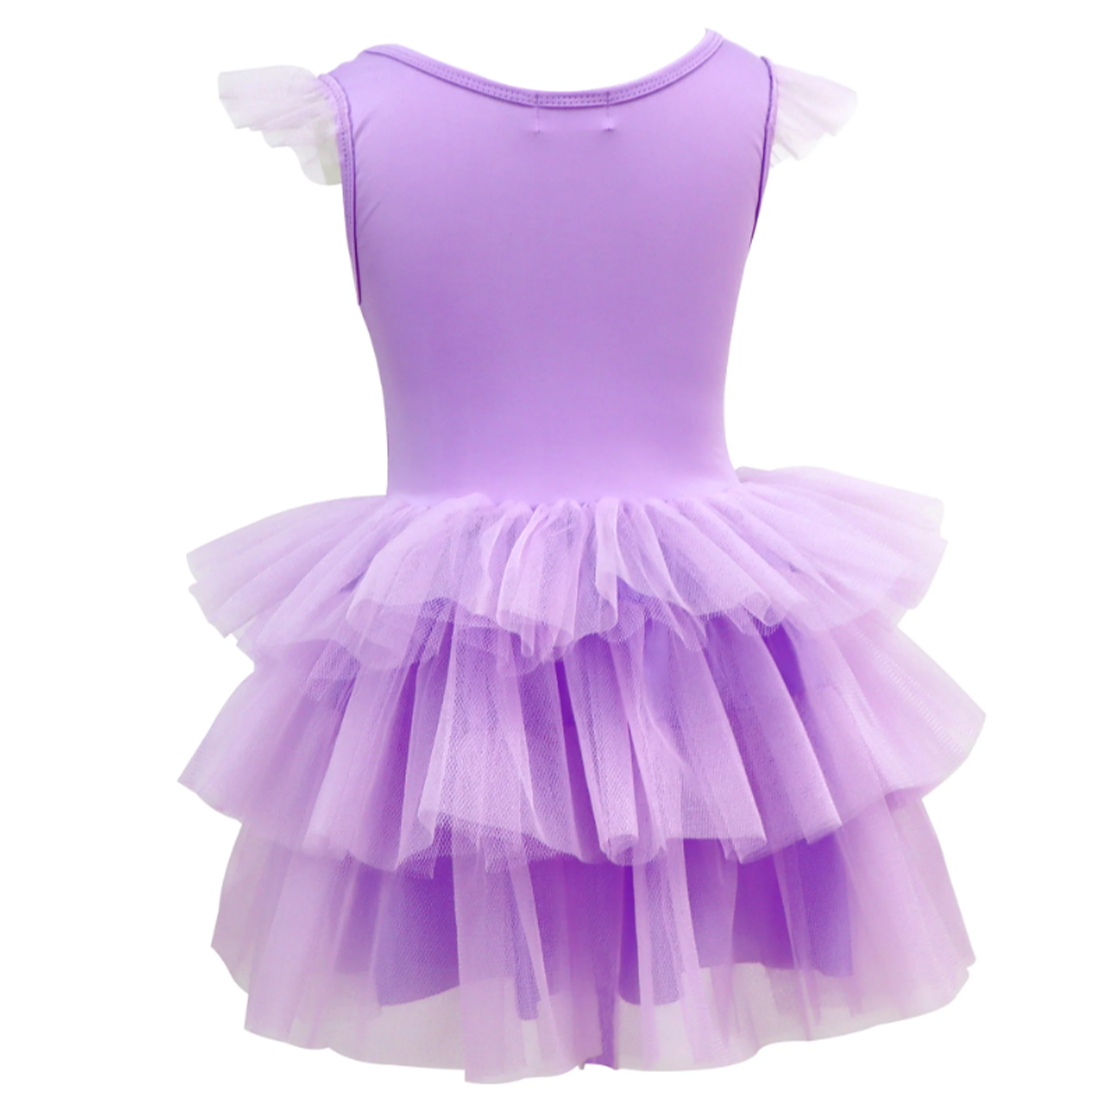 Claris The Secret Crown Fashion Dress in Lilac